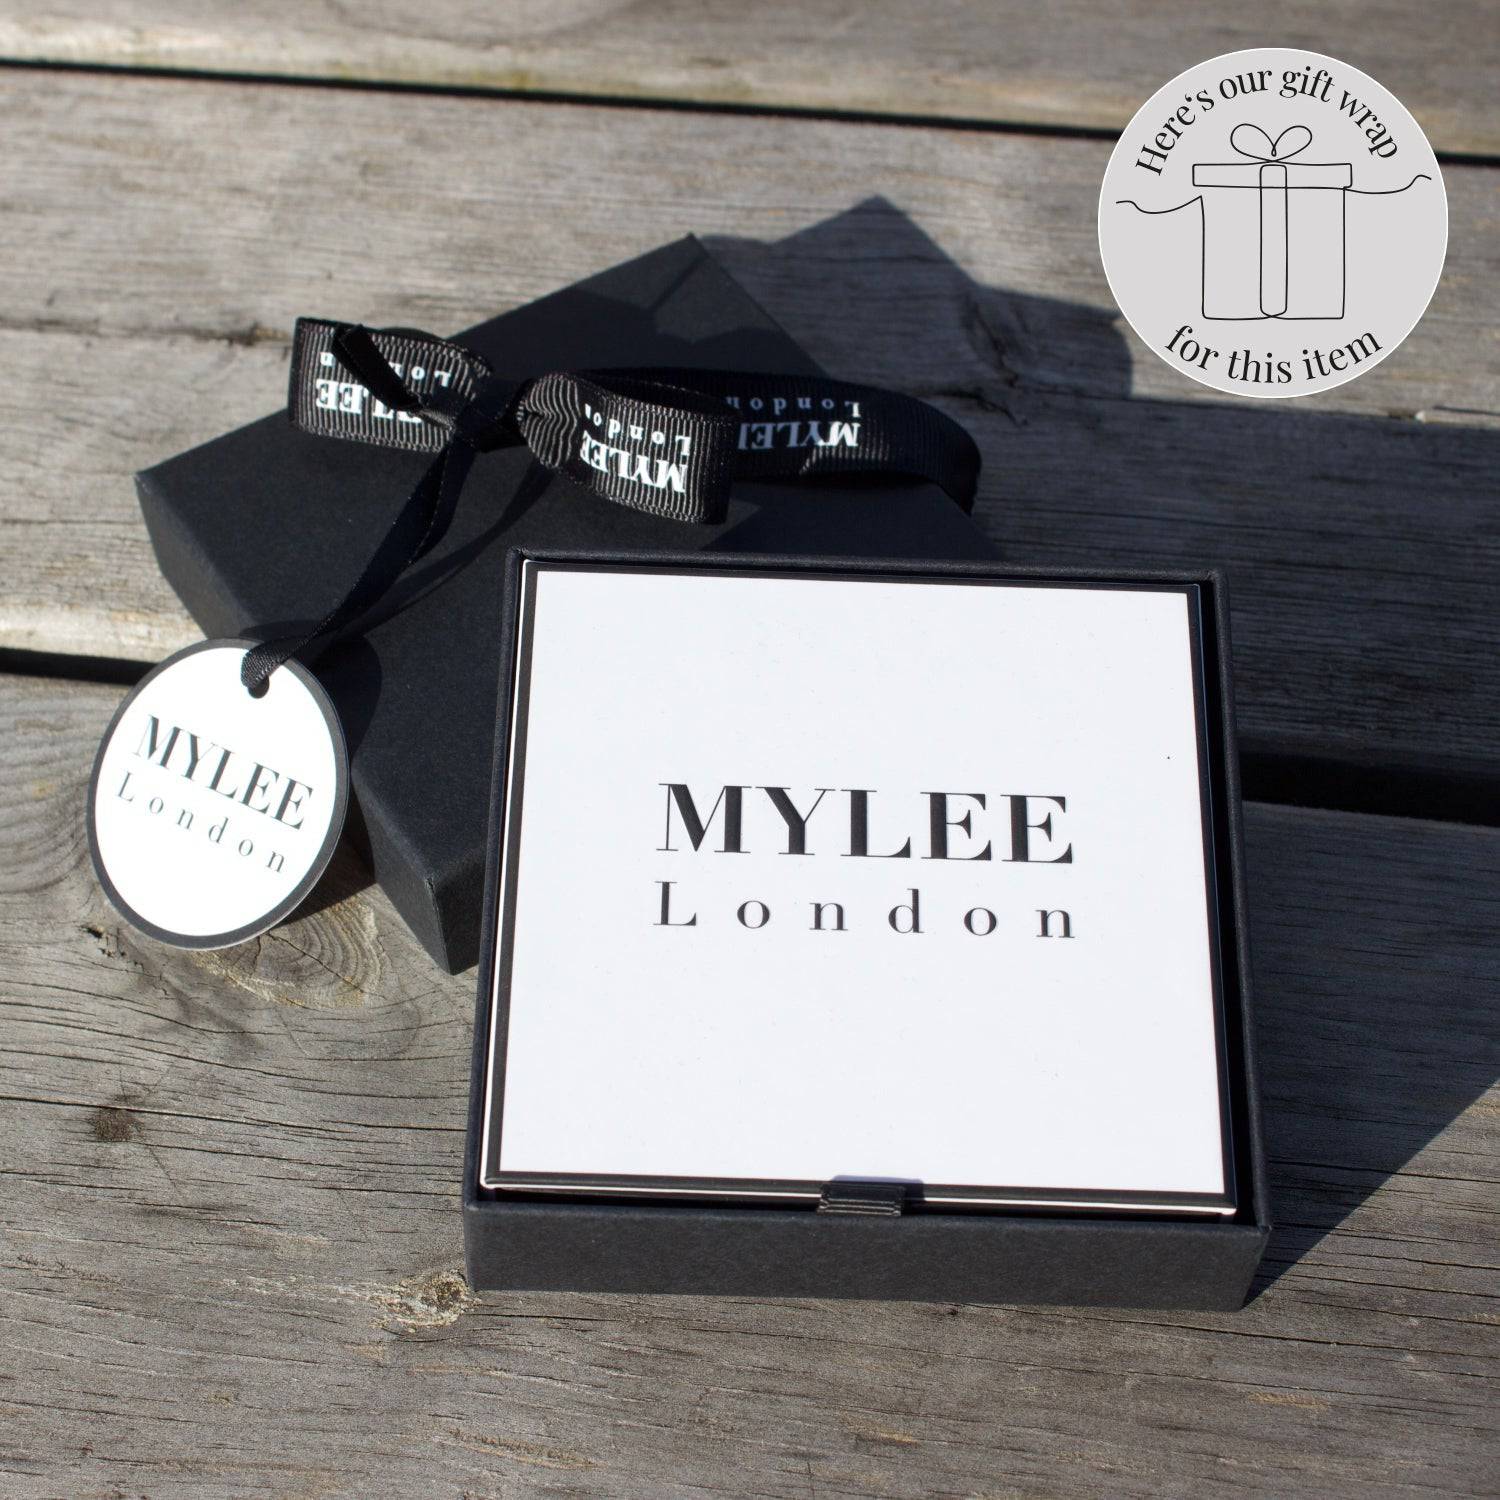 Guinea Pig Silver Earrings - MYLEE London